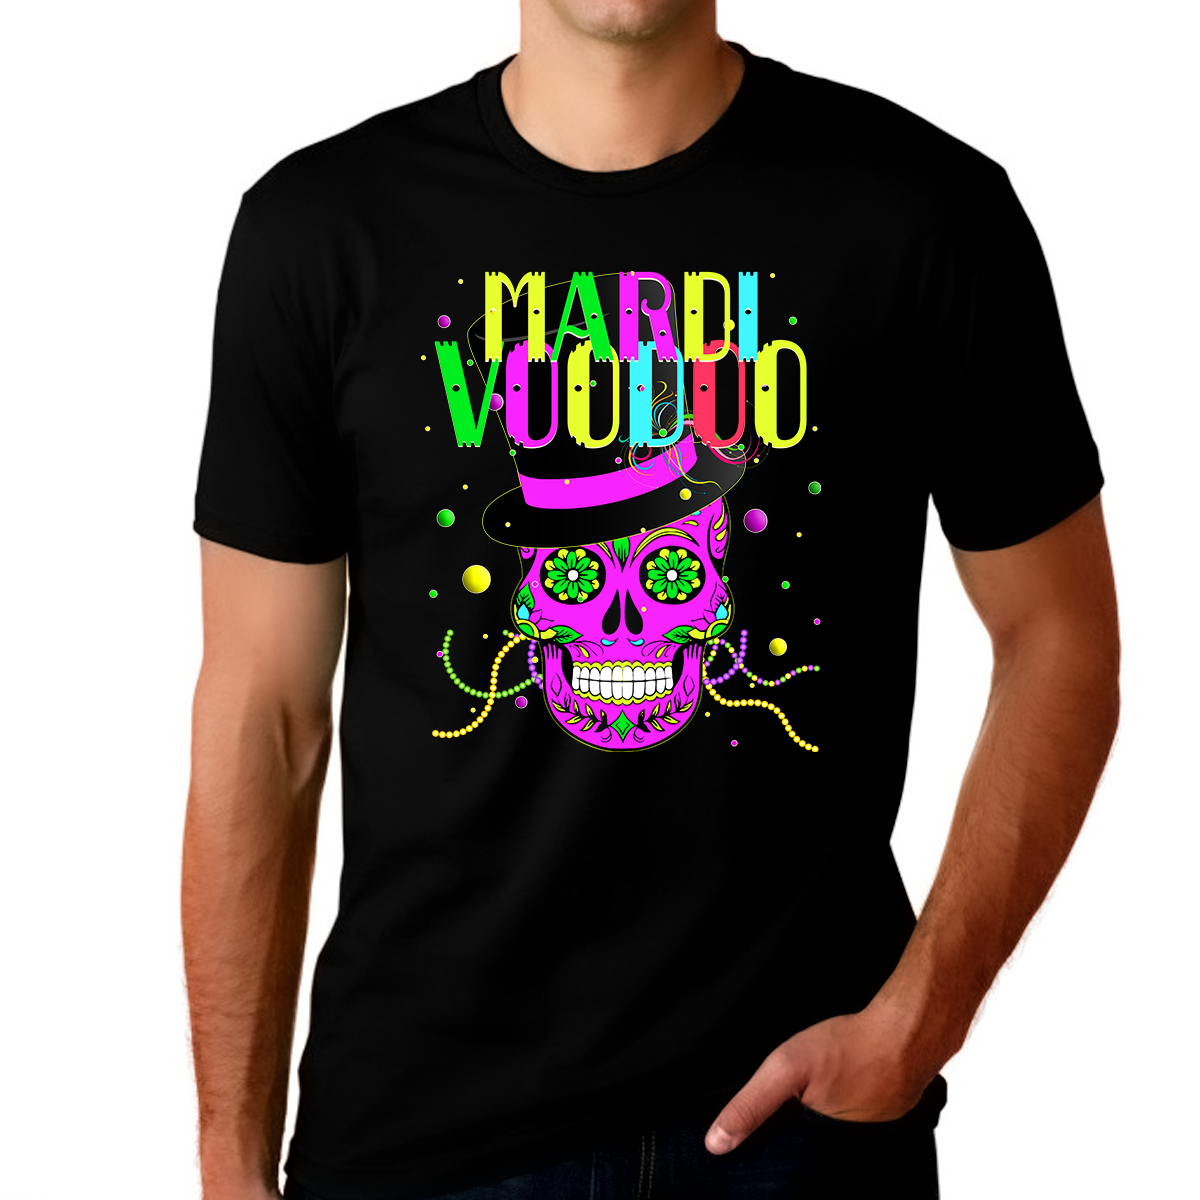 Mardi Gras Shirts for Men Mardi Gras Outfit for Men Mardi Gras Voodoo Mardi Gras Shirt Mardi Gras Shirt